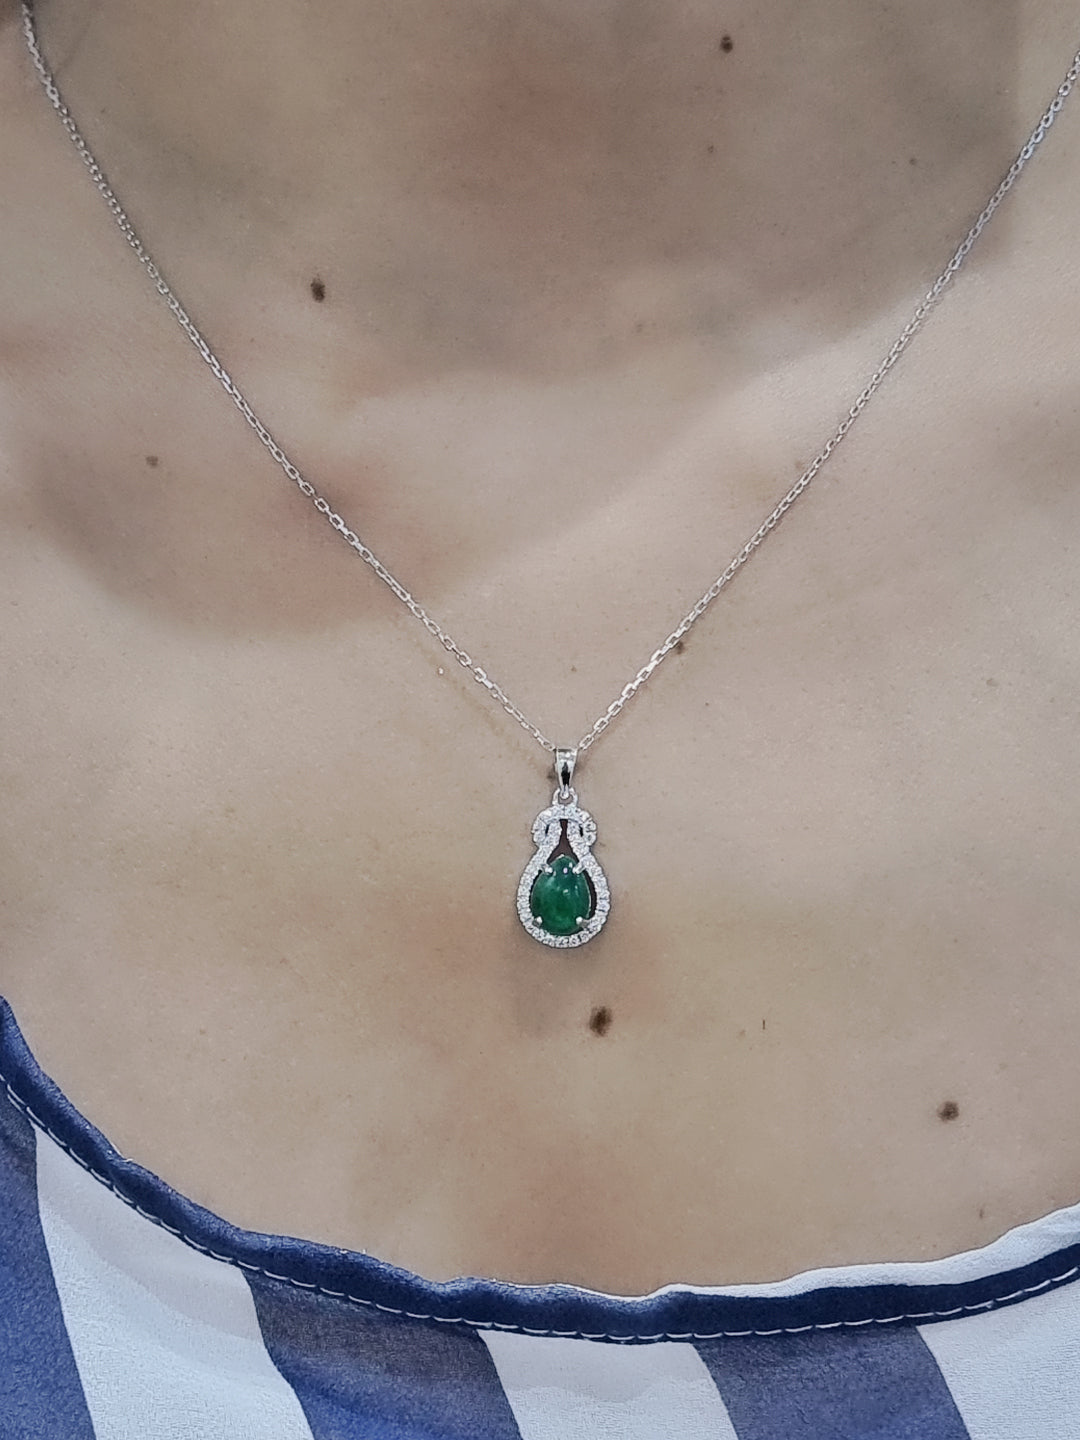 Emerald And Diamond Pendant In 18k White Gold.